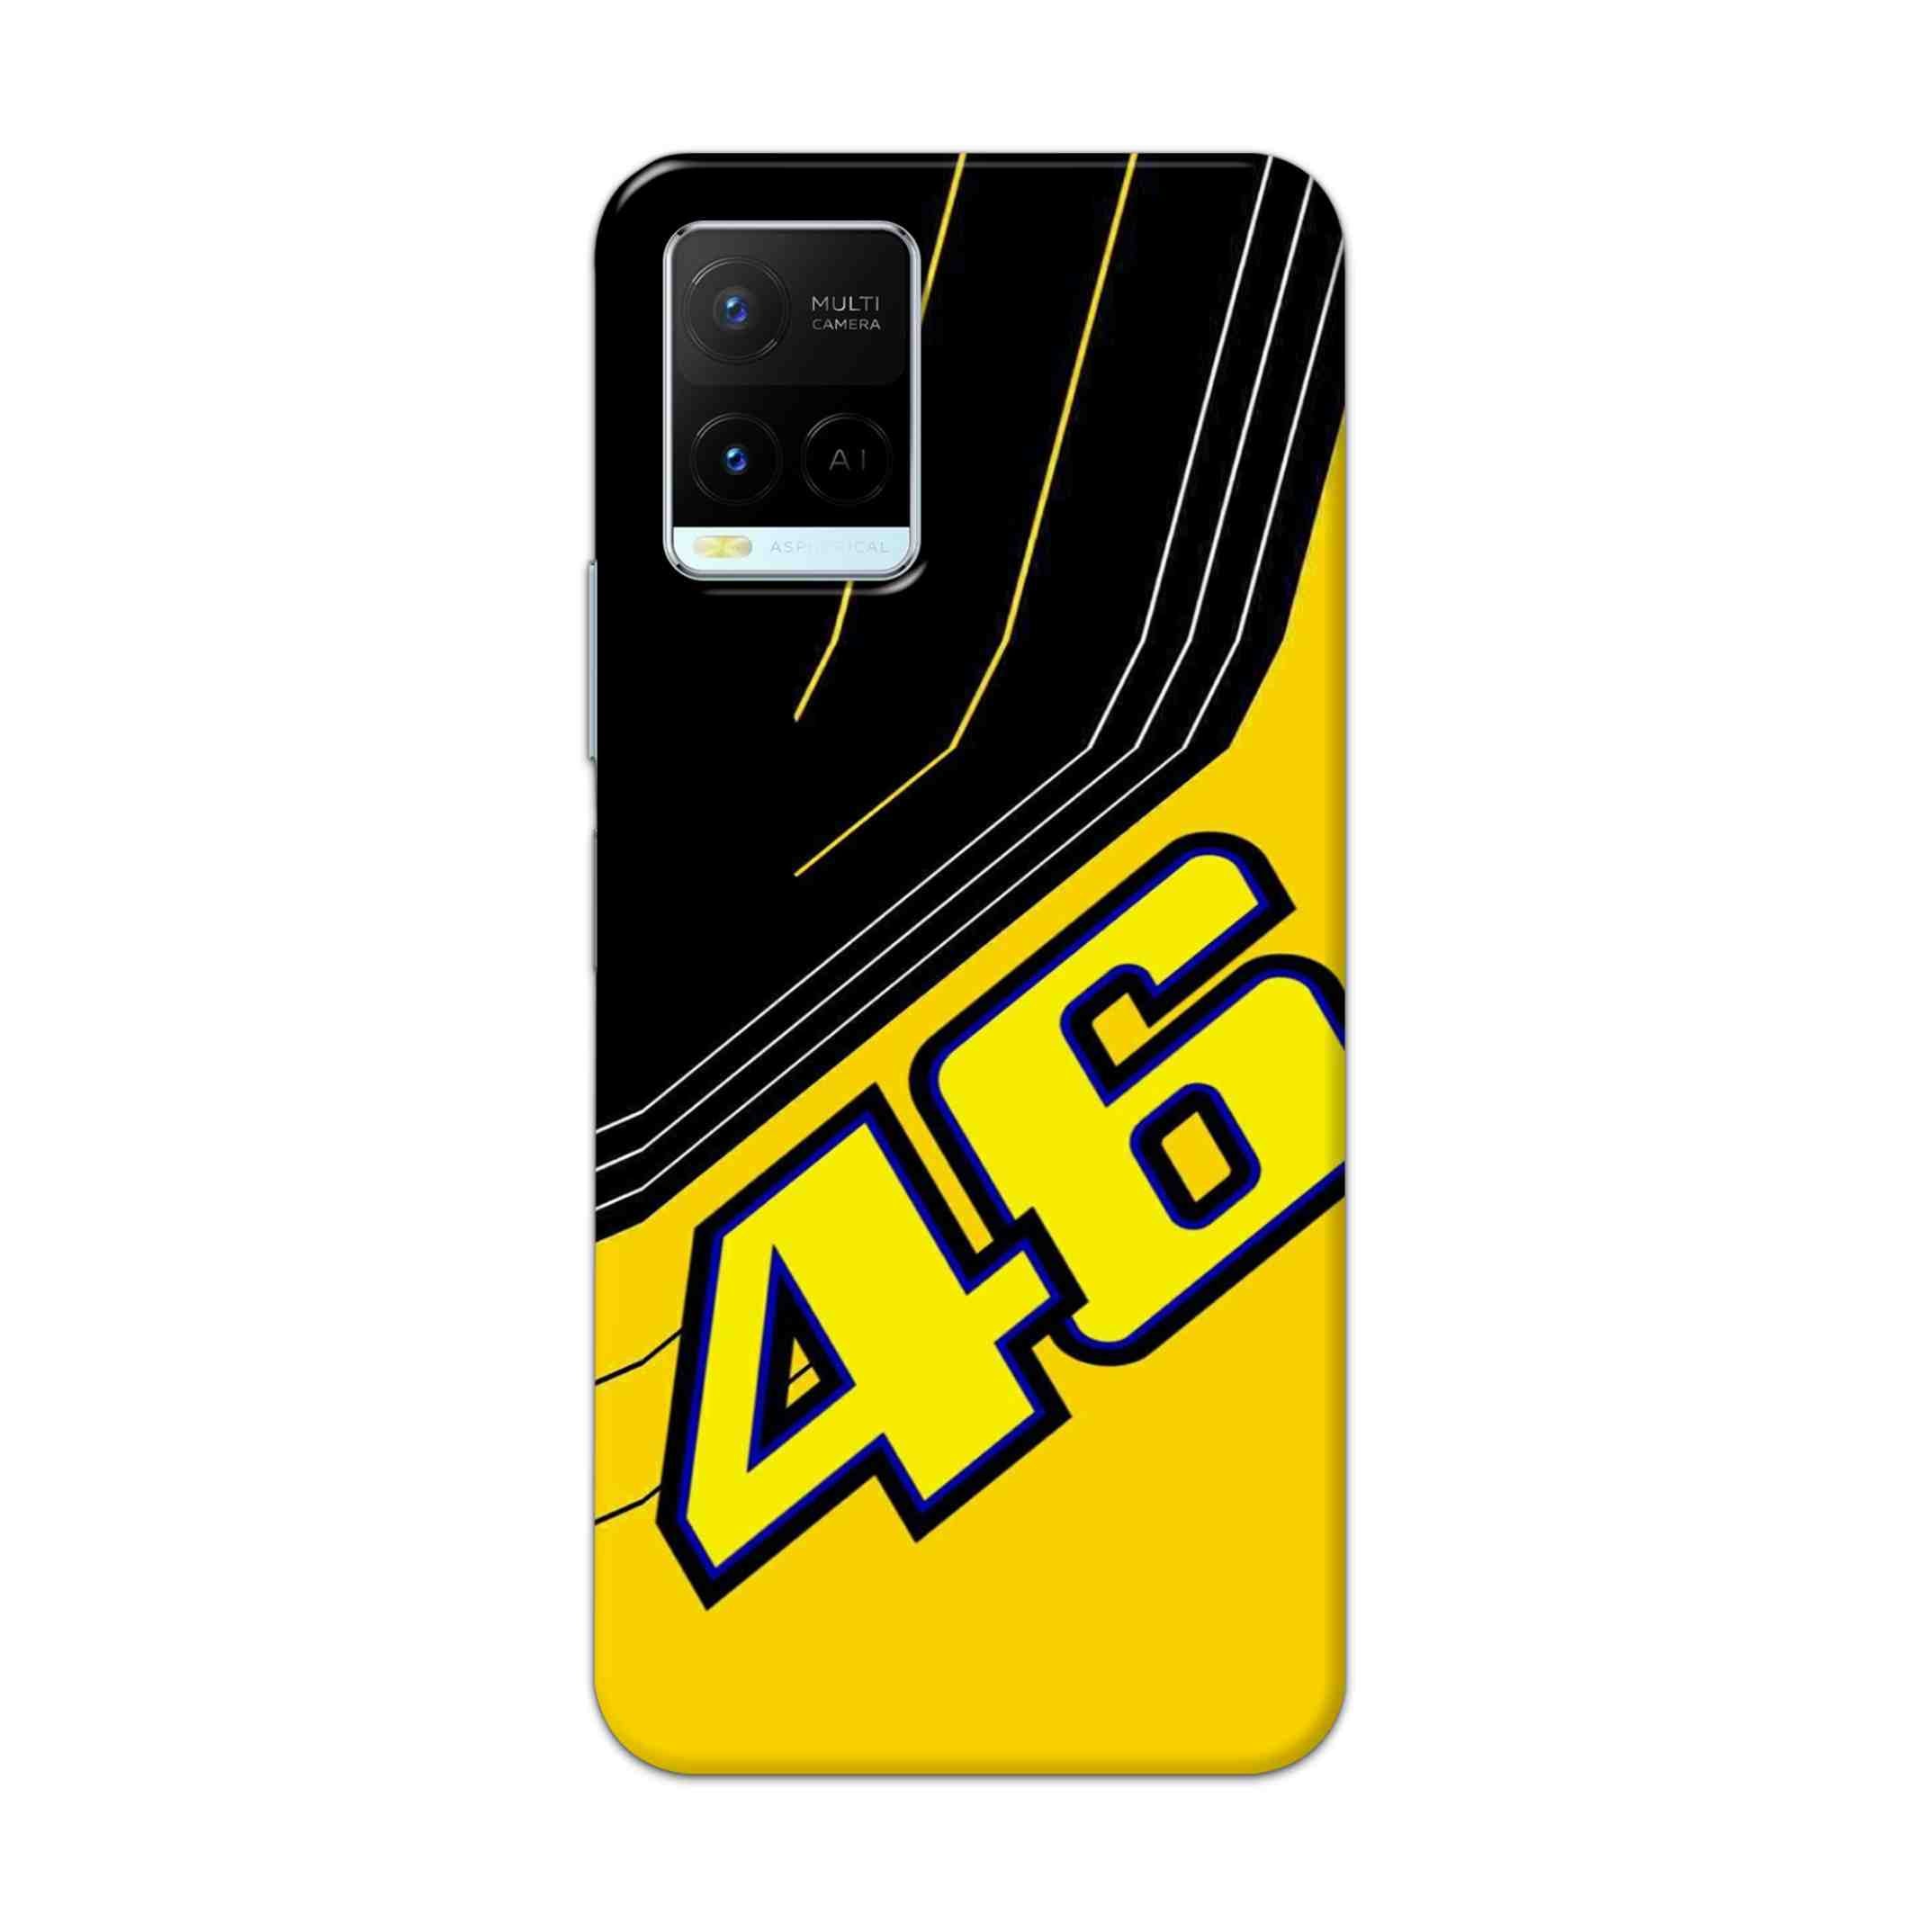 Buy 46 Hard Back Mobile Phone Case Cover For Vivo Y21 2021 Online